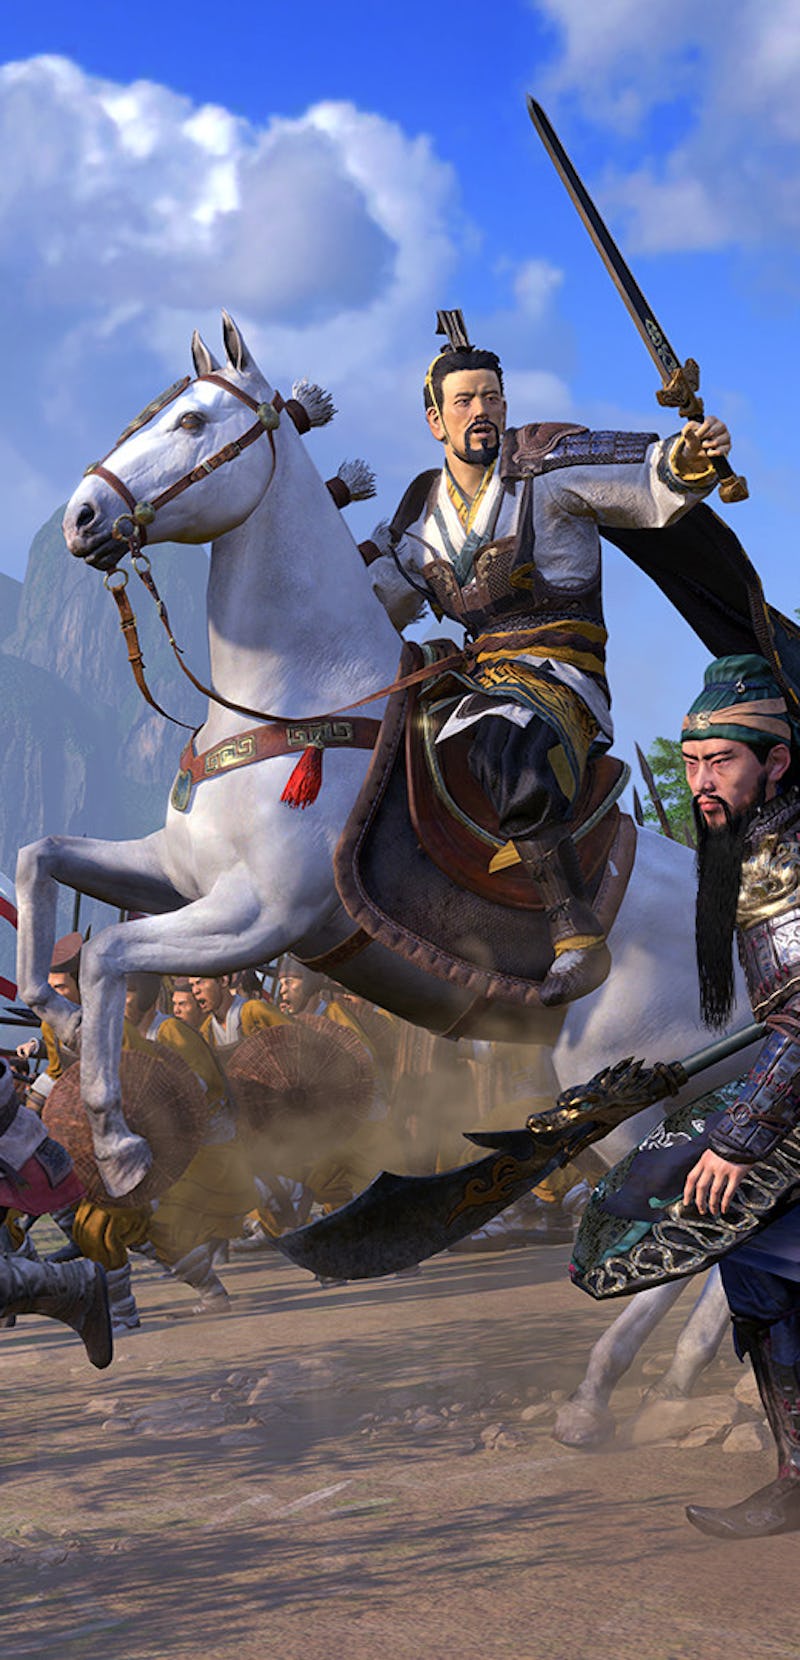 A render of horseback combat in Total War Three Kingdoms strategy game